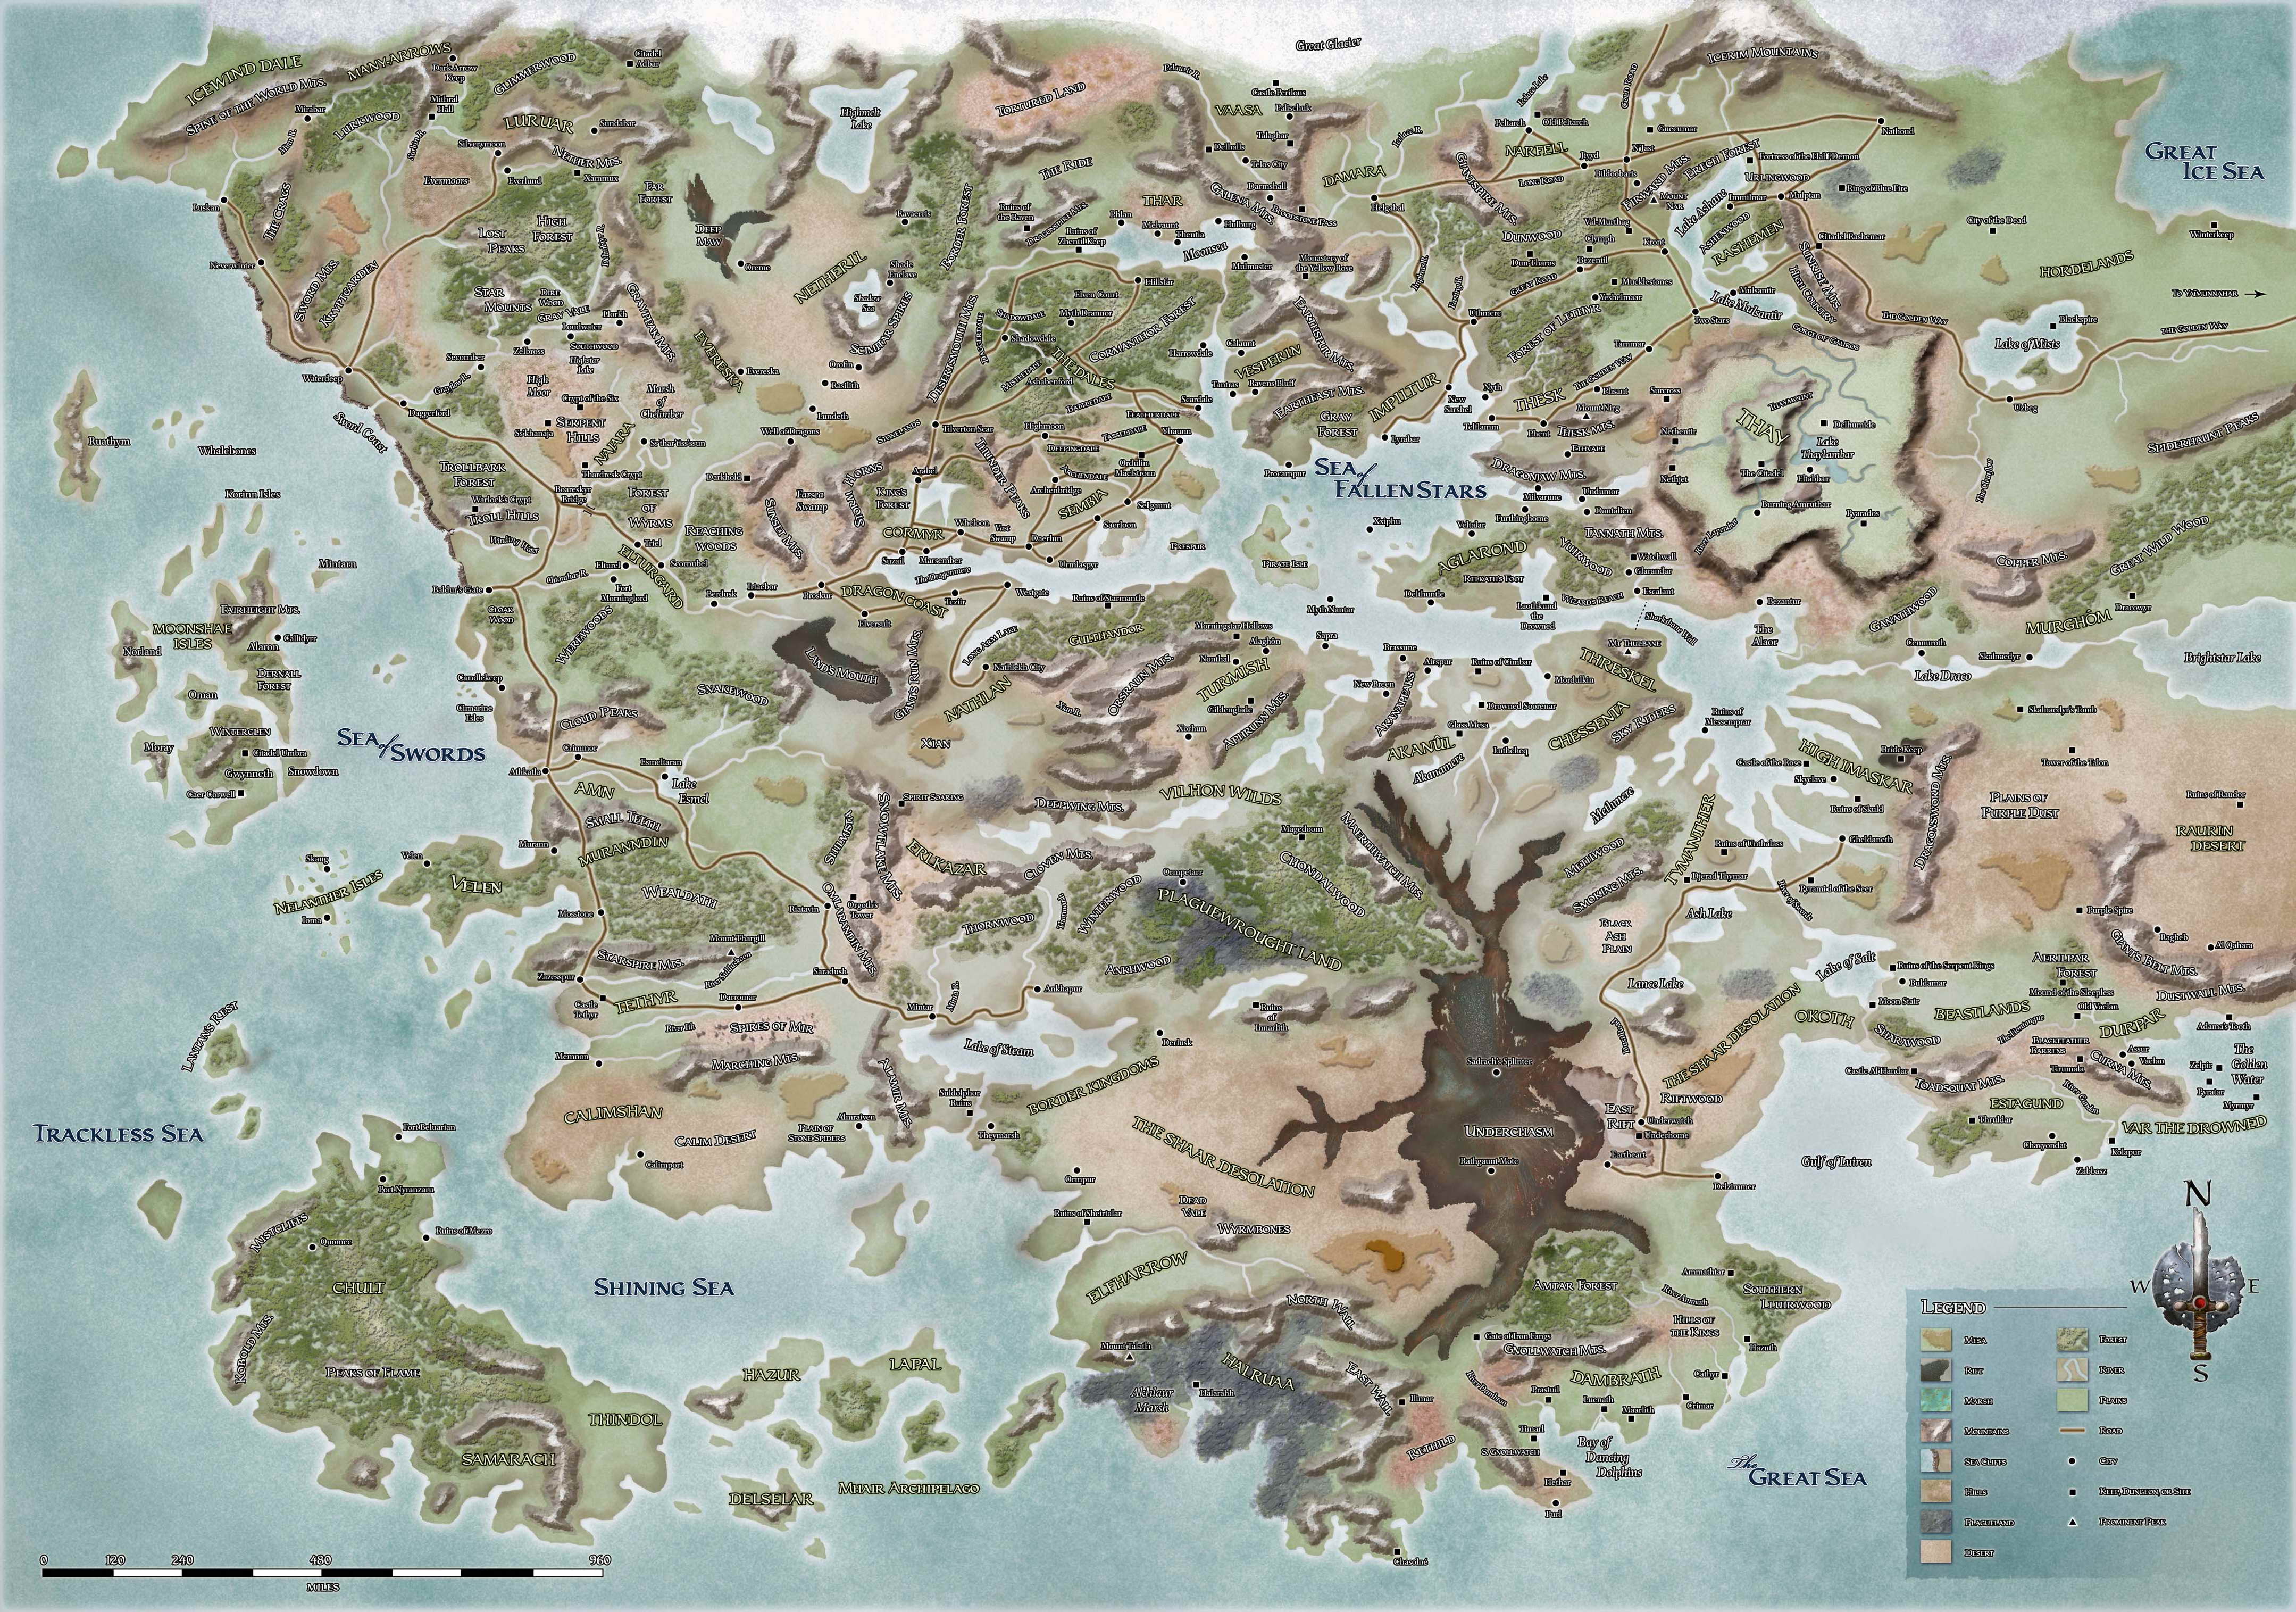 Fantasy Dungeons & Dragons HD Wallpaper | Background Image